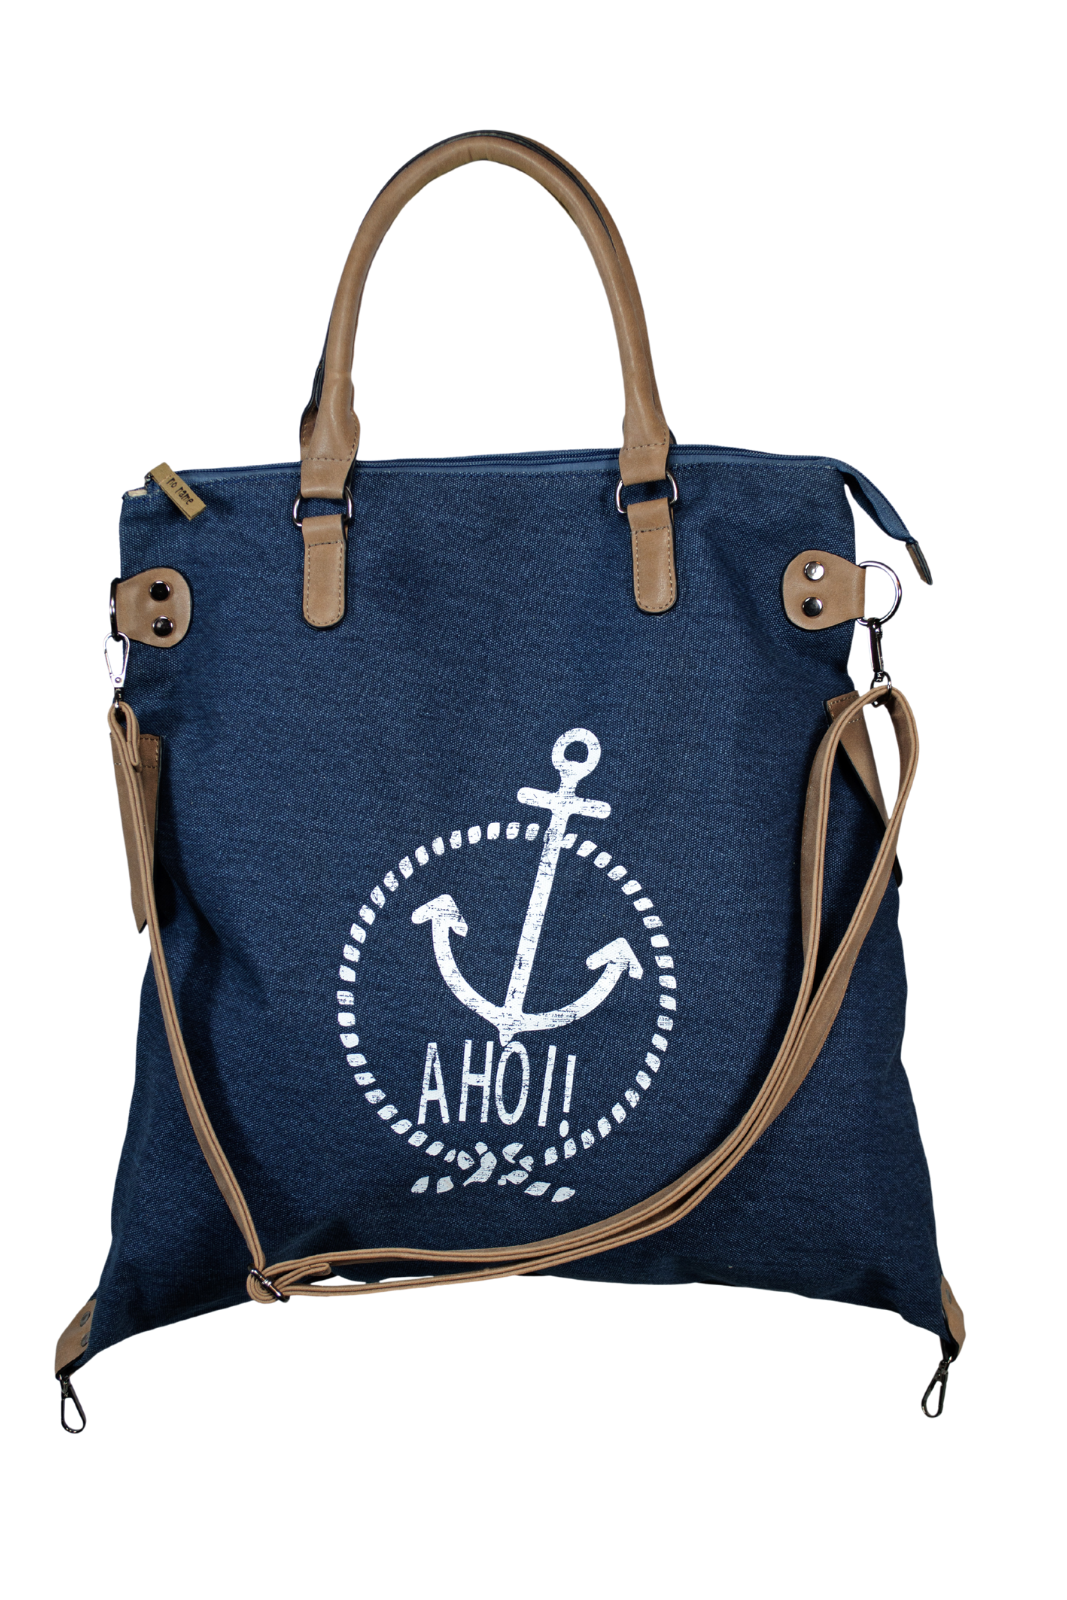 Shopping Bag "Ahoi"